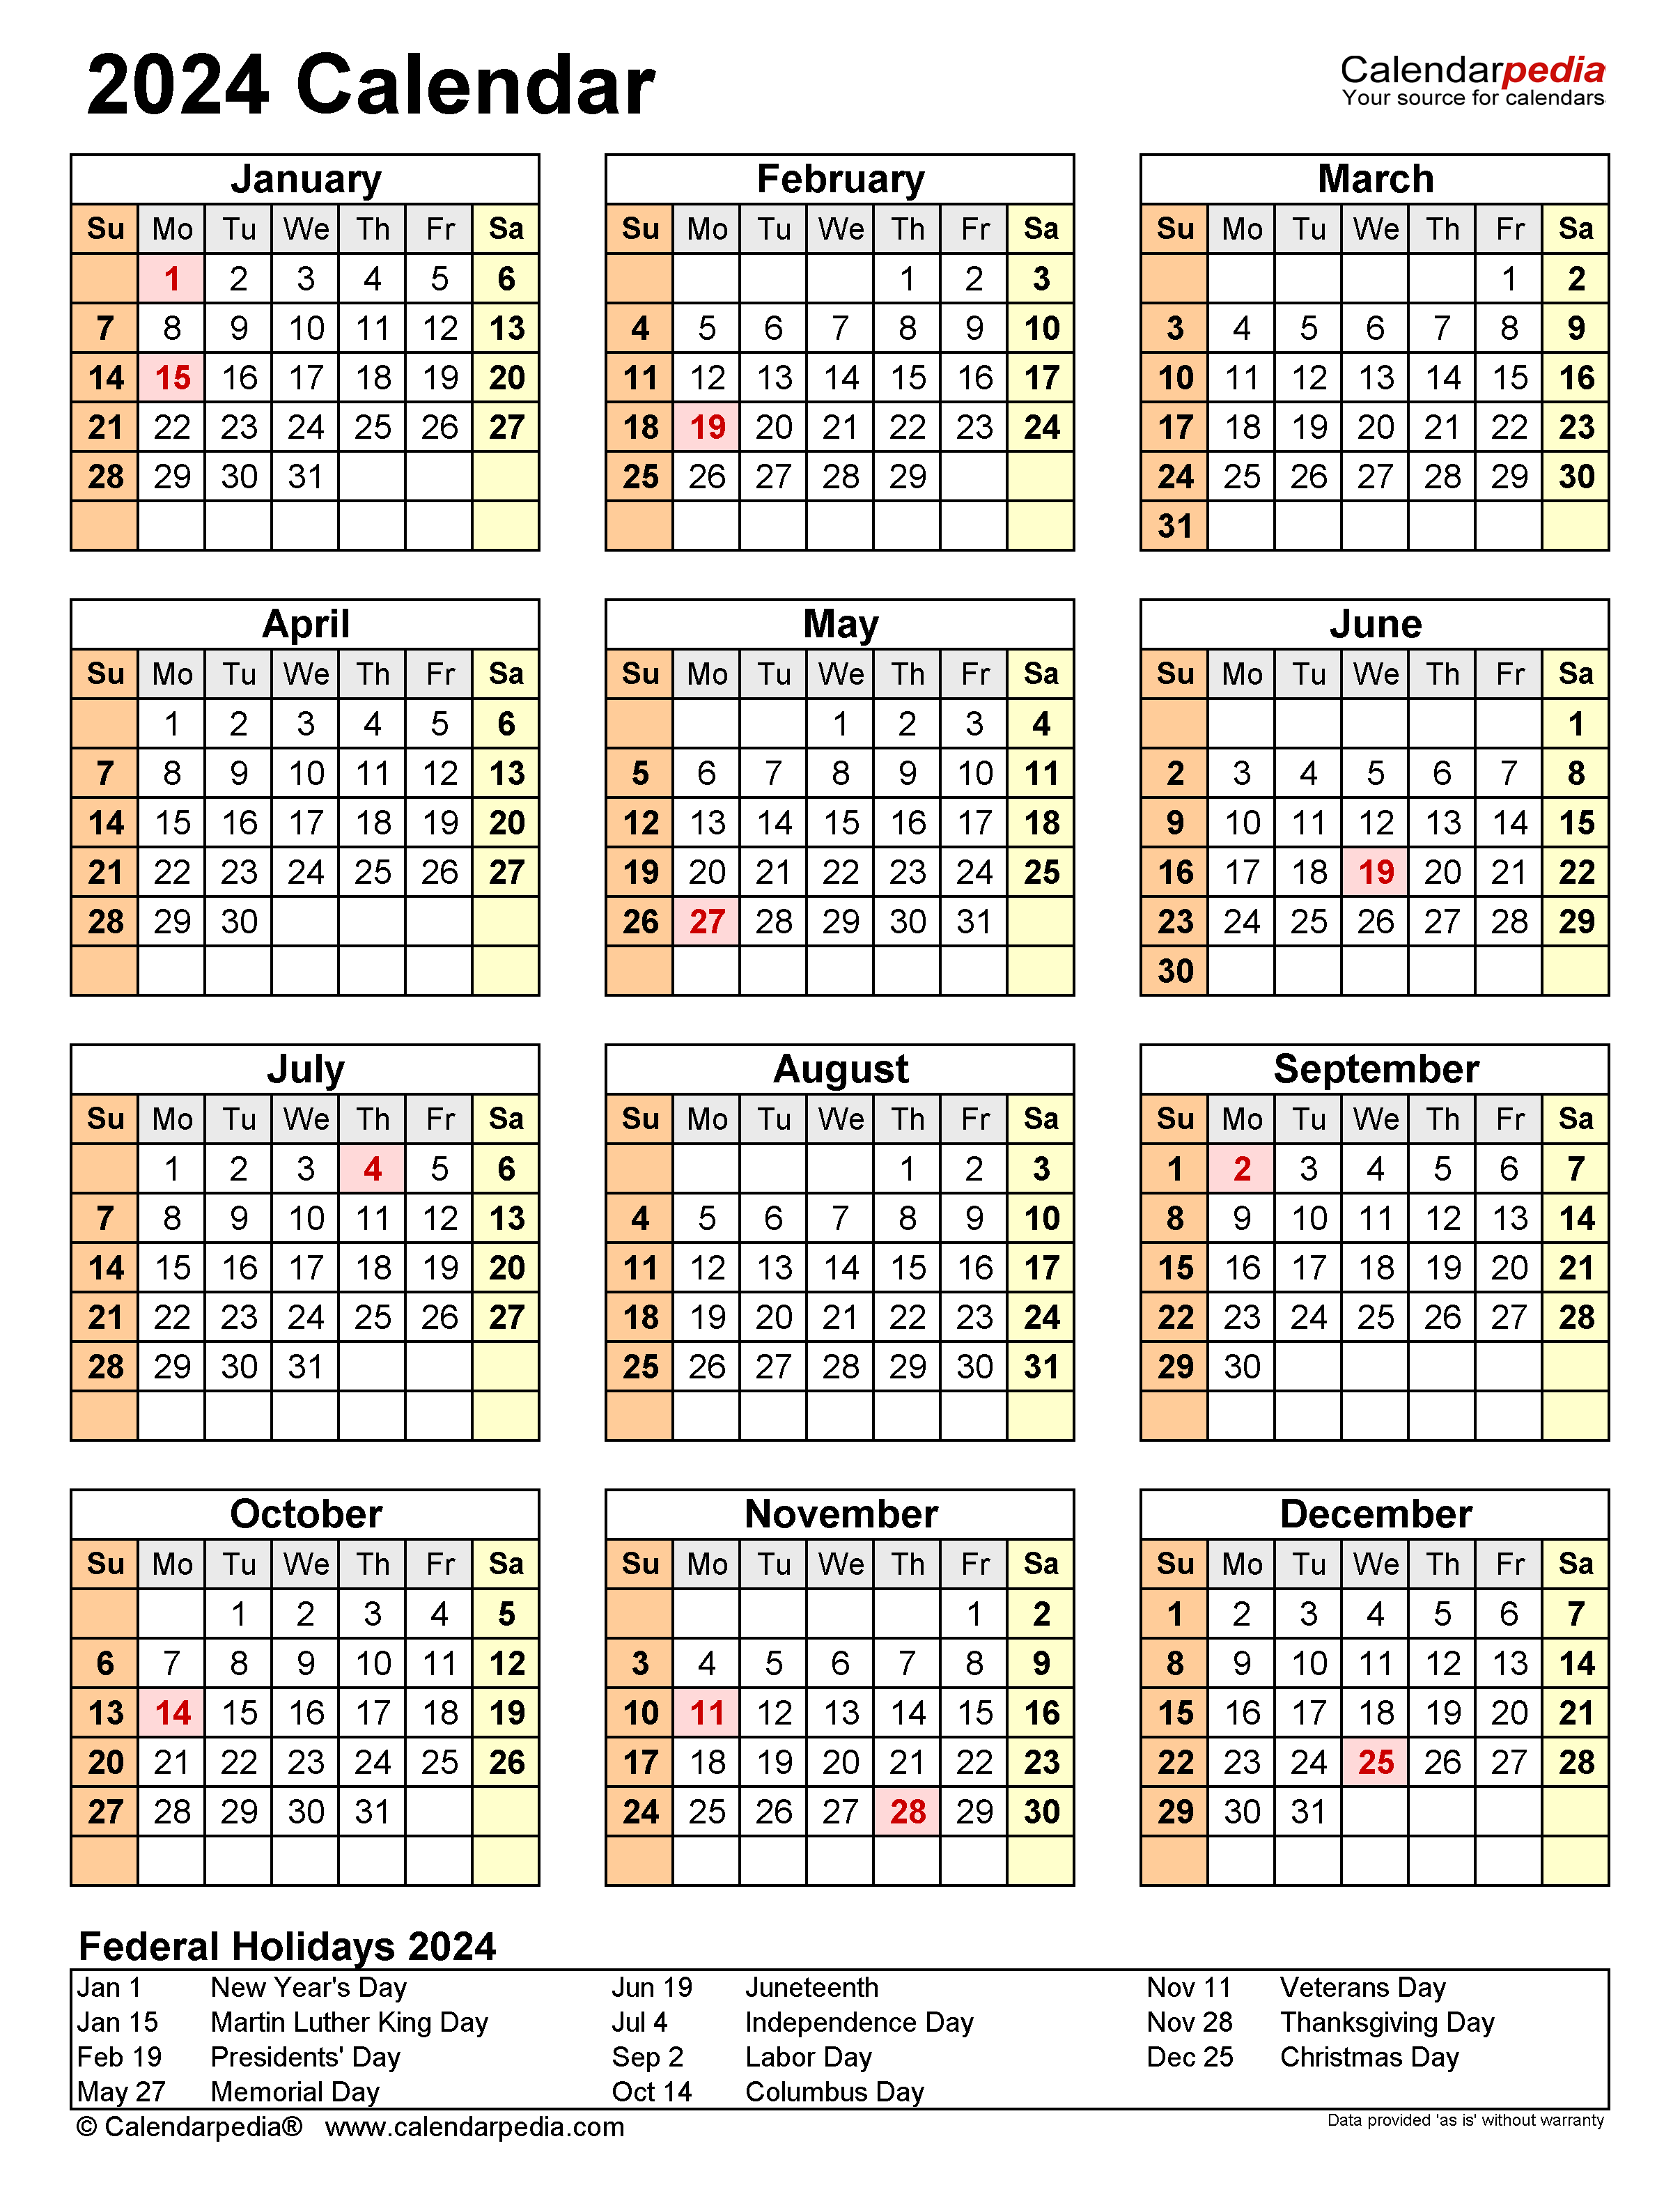 Free Printable 2024 Calendar With Holidays Crownflourmills - Free Printable 2024 Calendar With Holidays November